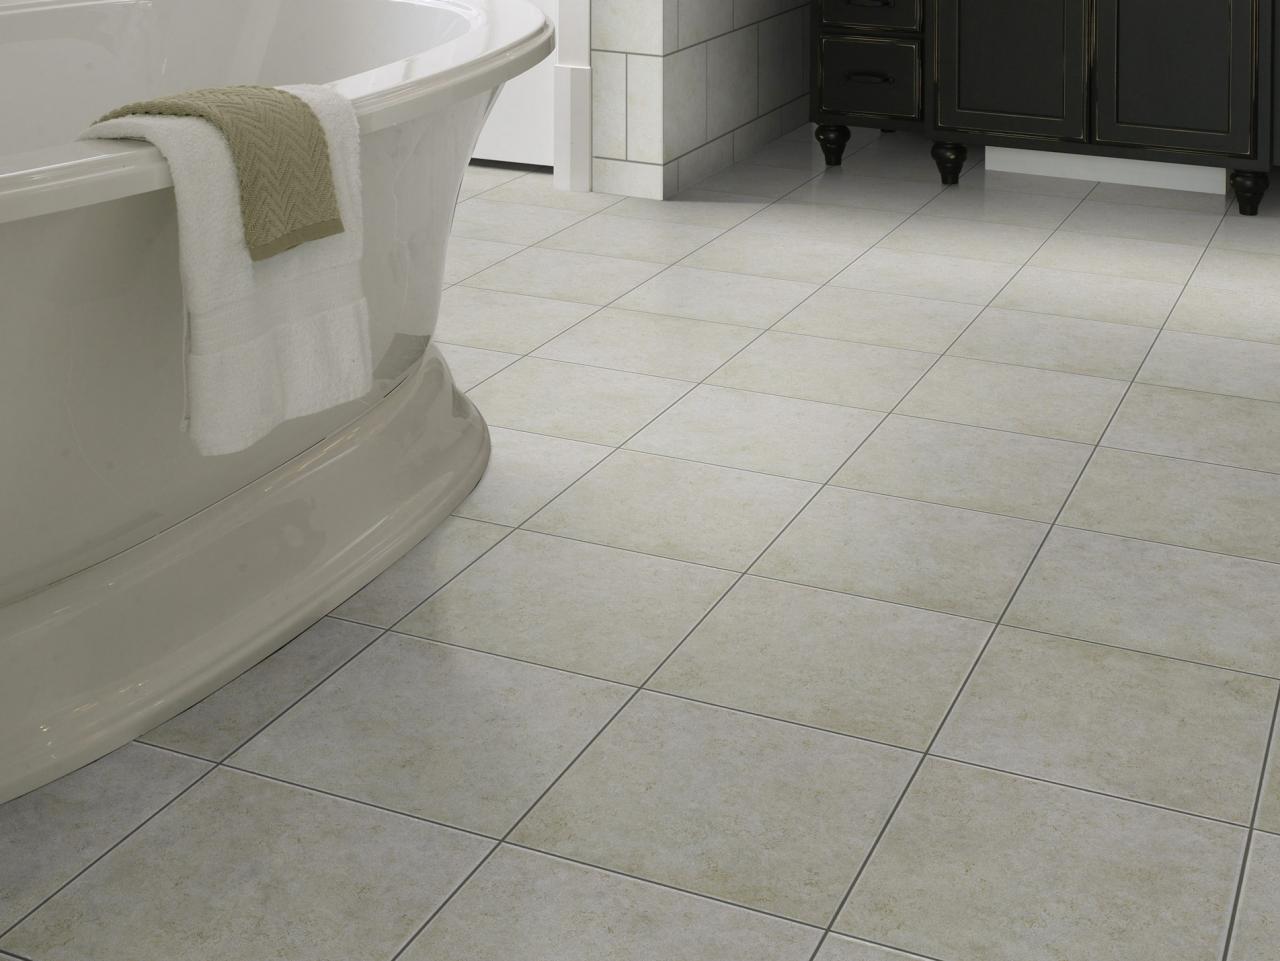 Why Homeowners Love Ceramic Tile, Porcelain Tile For Bathroom